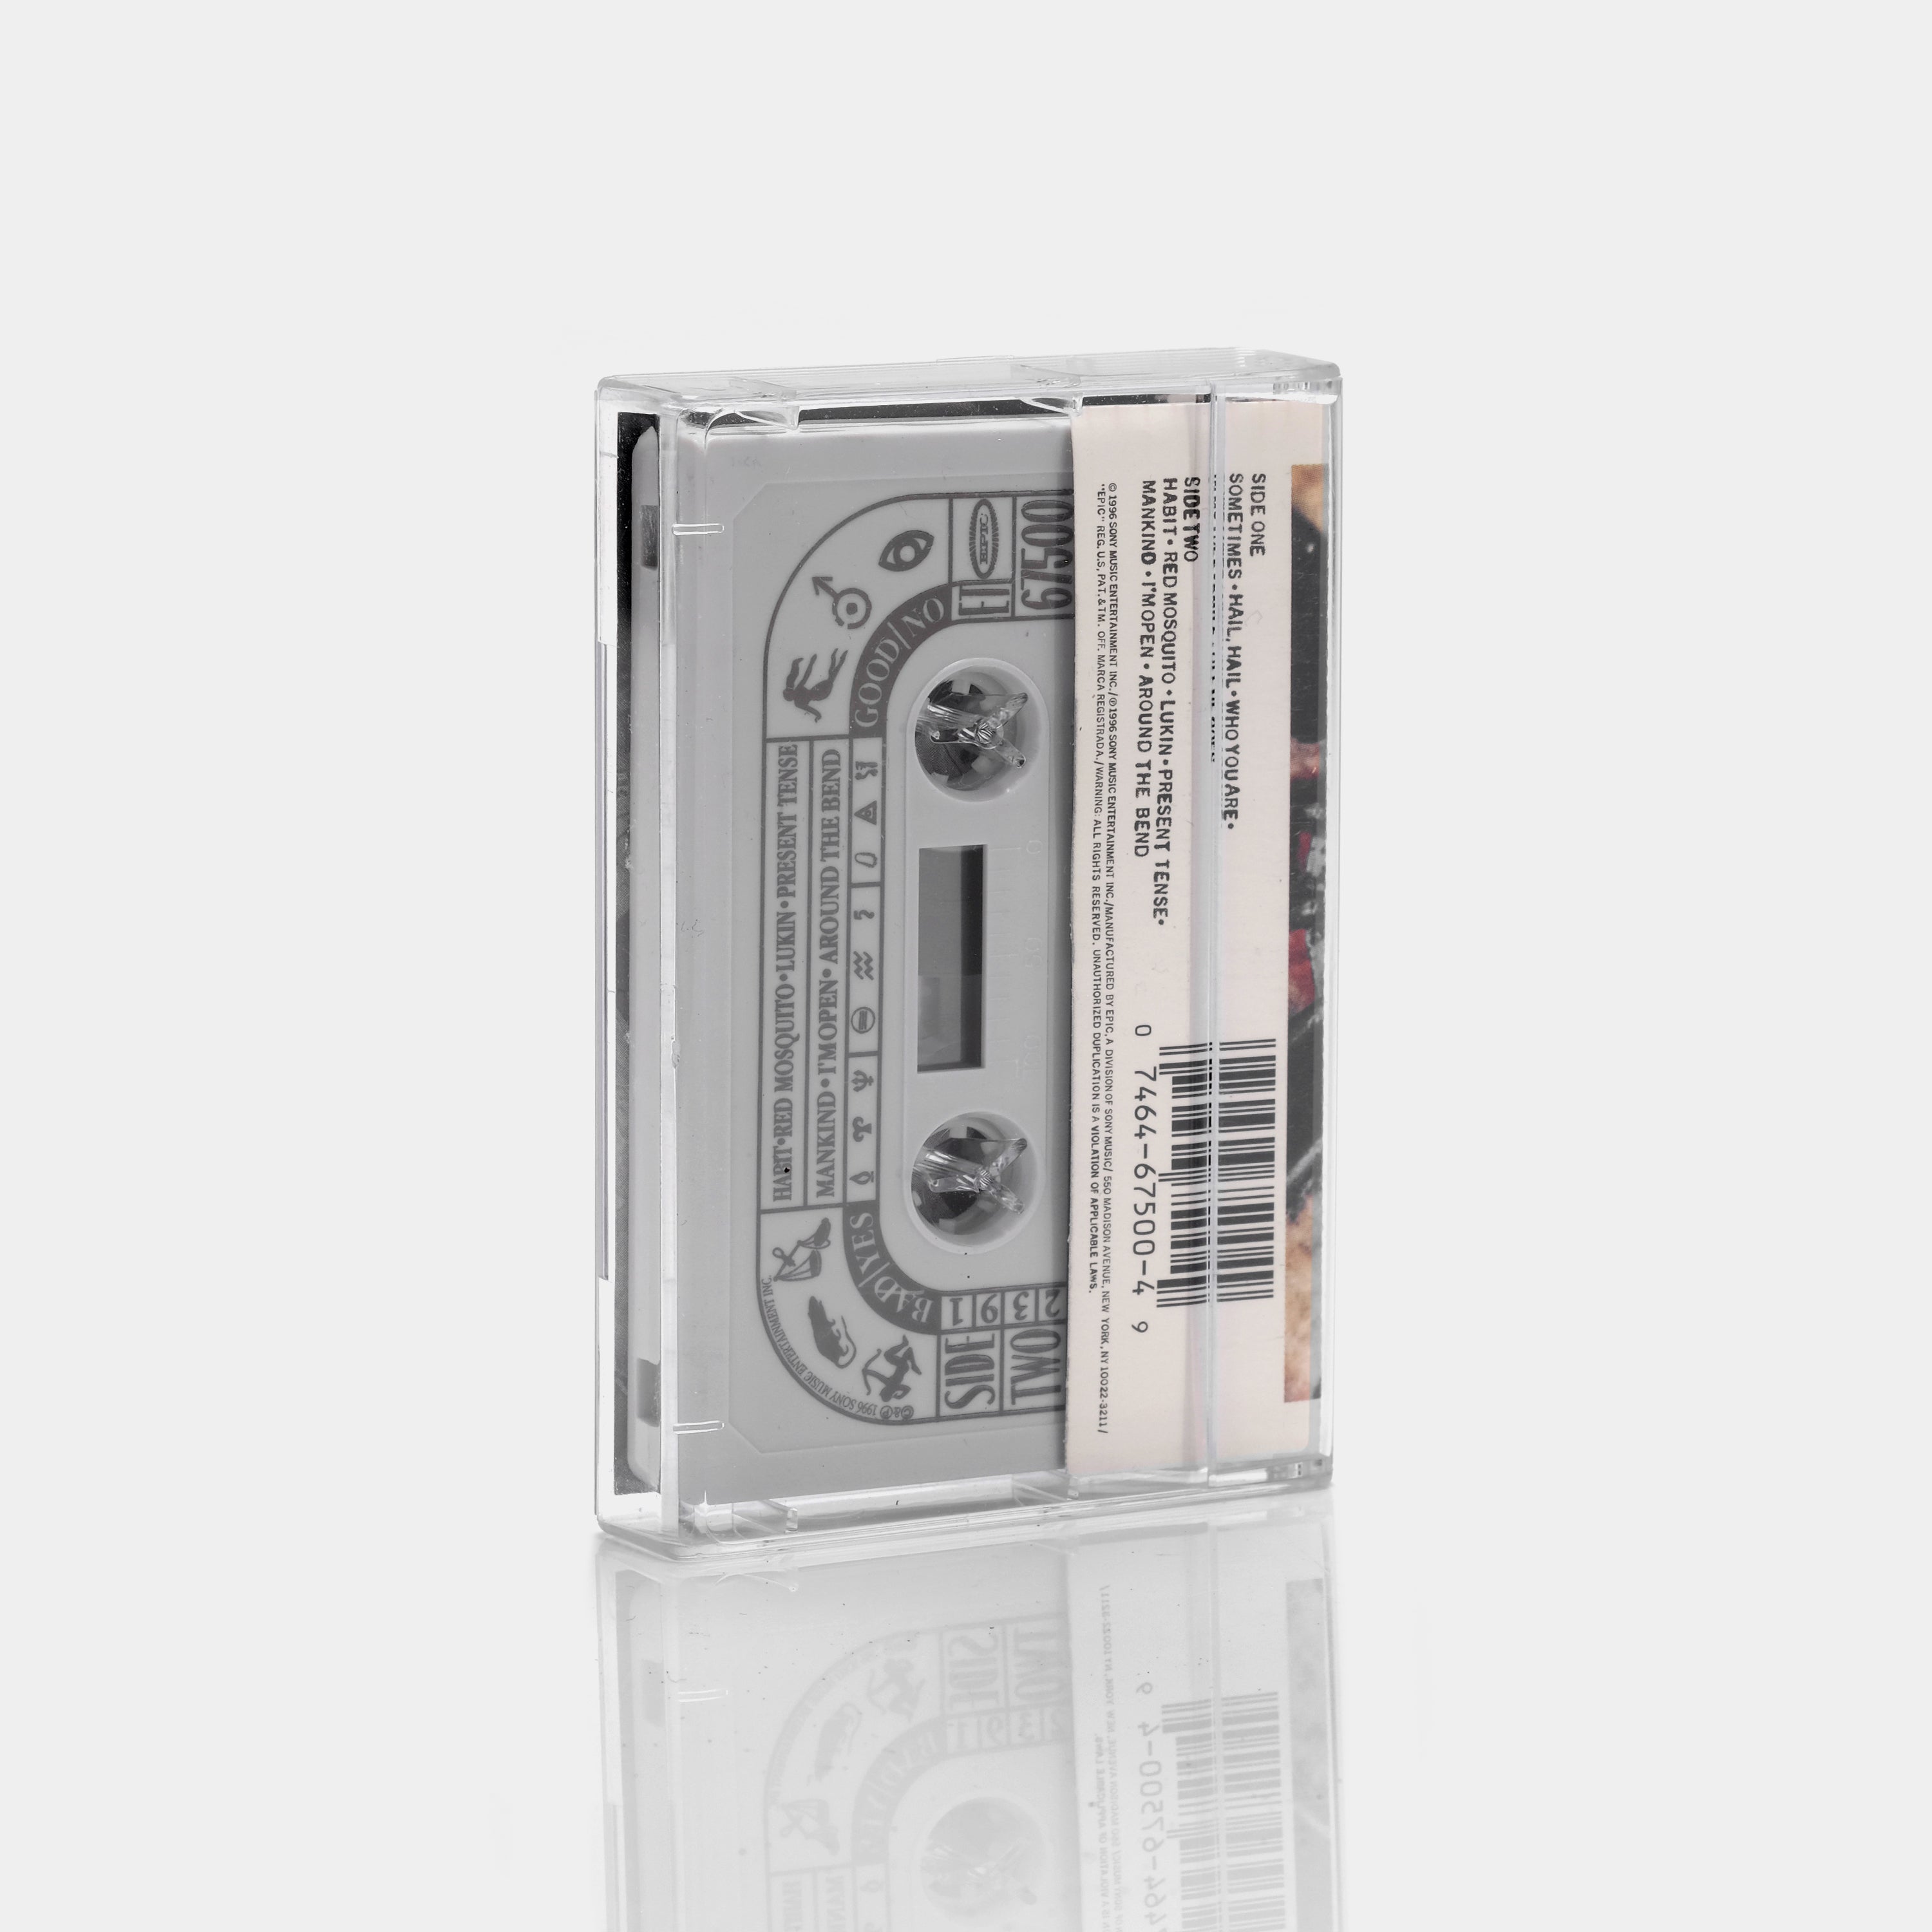 Pearl Jam - No Code Cassette Tape